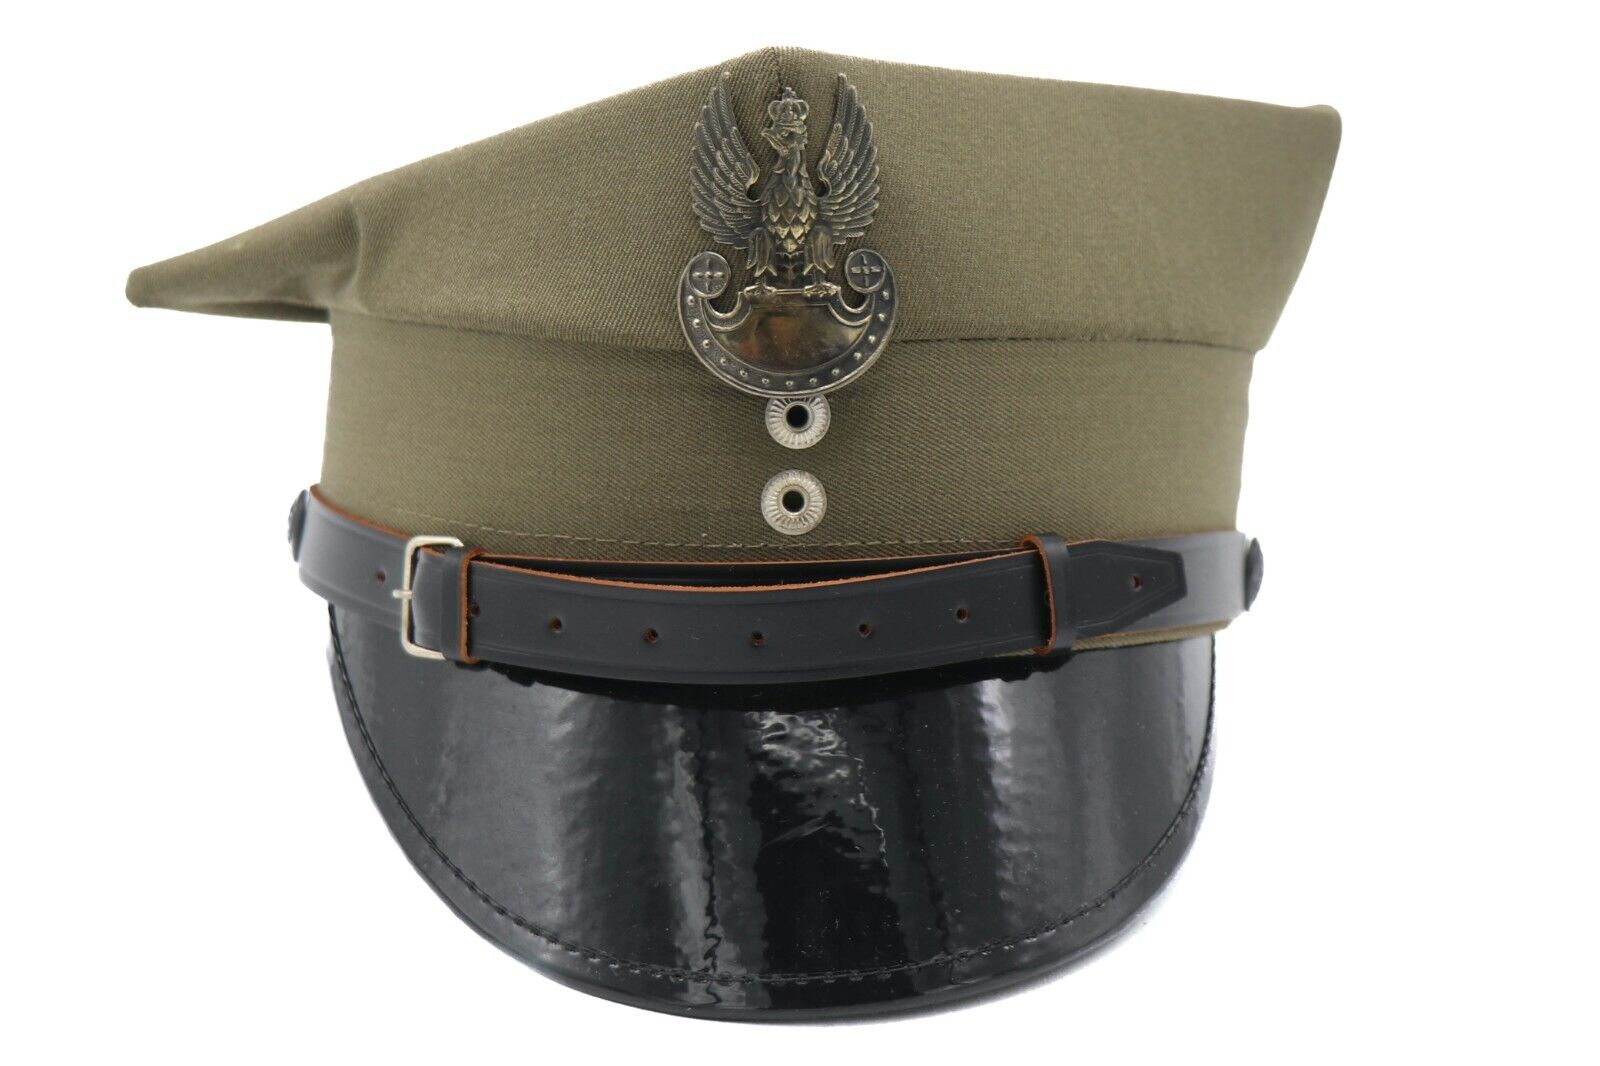 Authentic Polish Army Rogatywka Peaked Cap Khaki Parade Dress Uniform Hat Visor